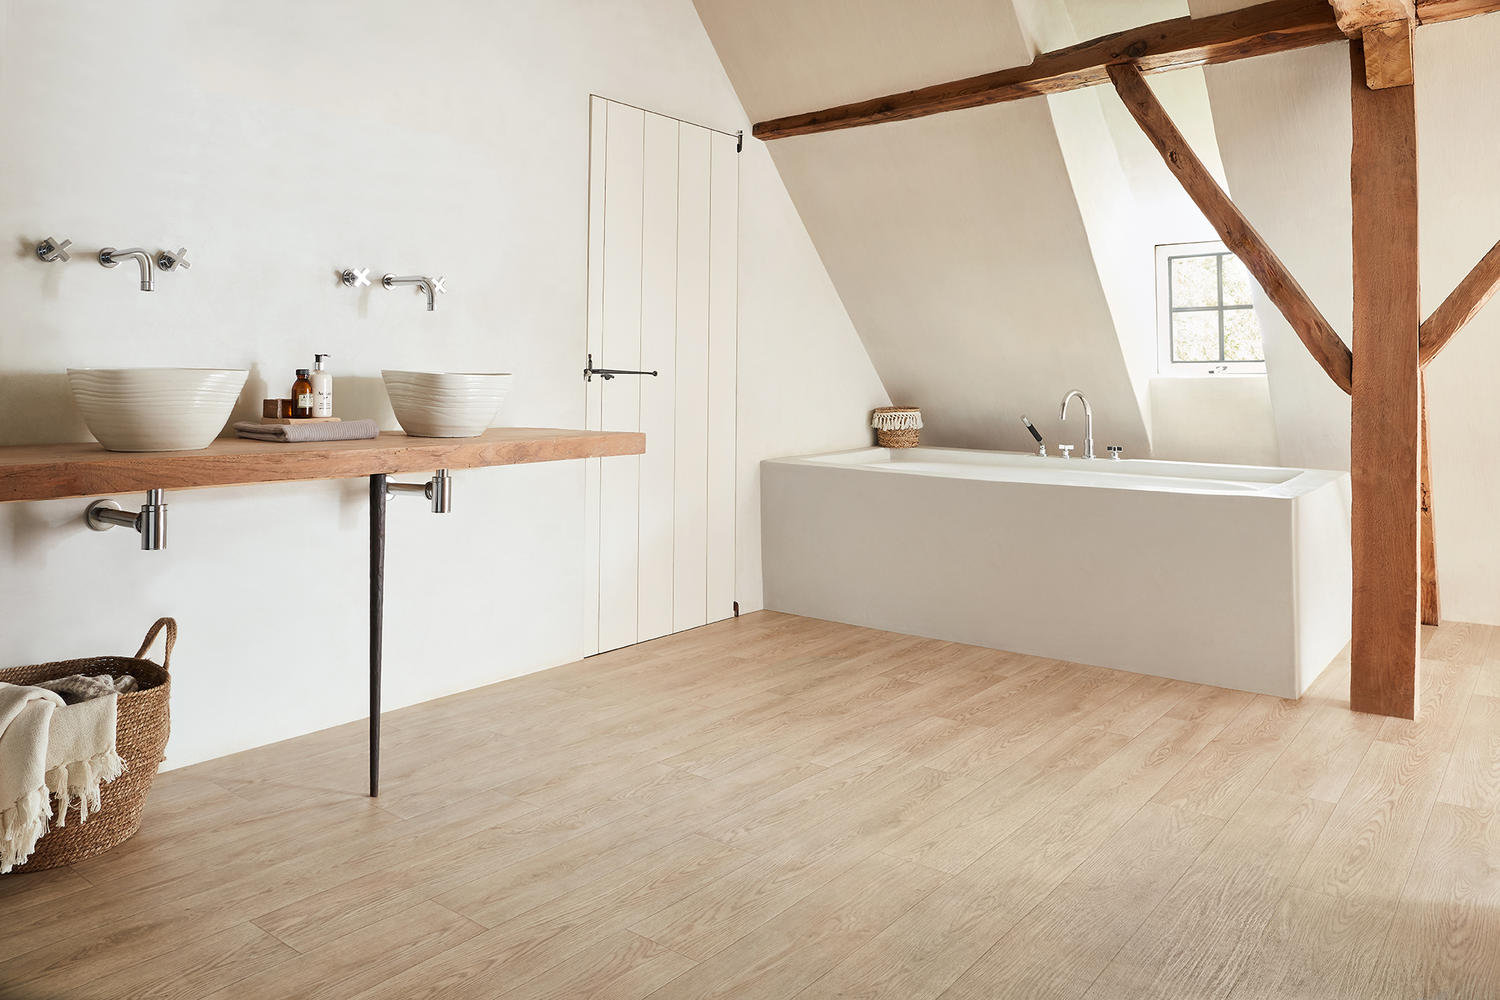 What Is The Best Flooring For Bathrooms, Does Vinyl Plank Flooring Work In Bathrooms